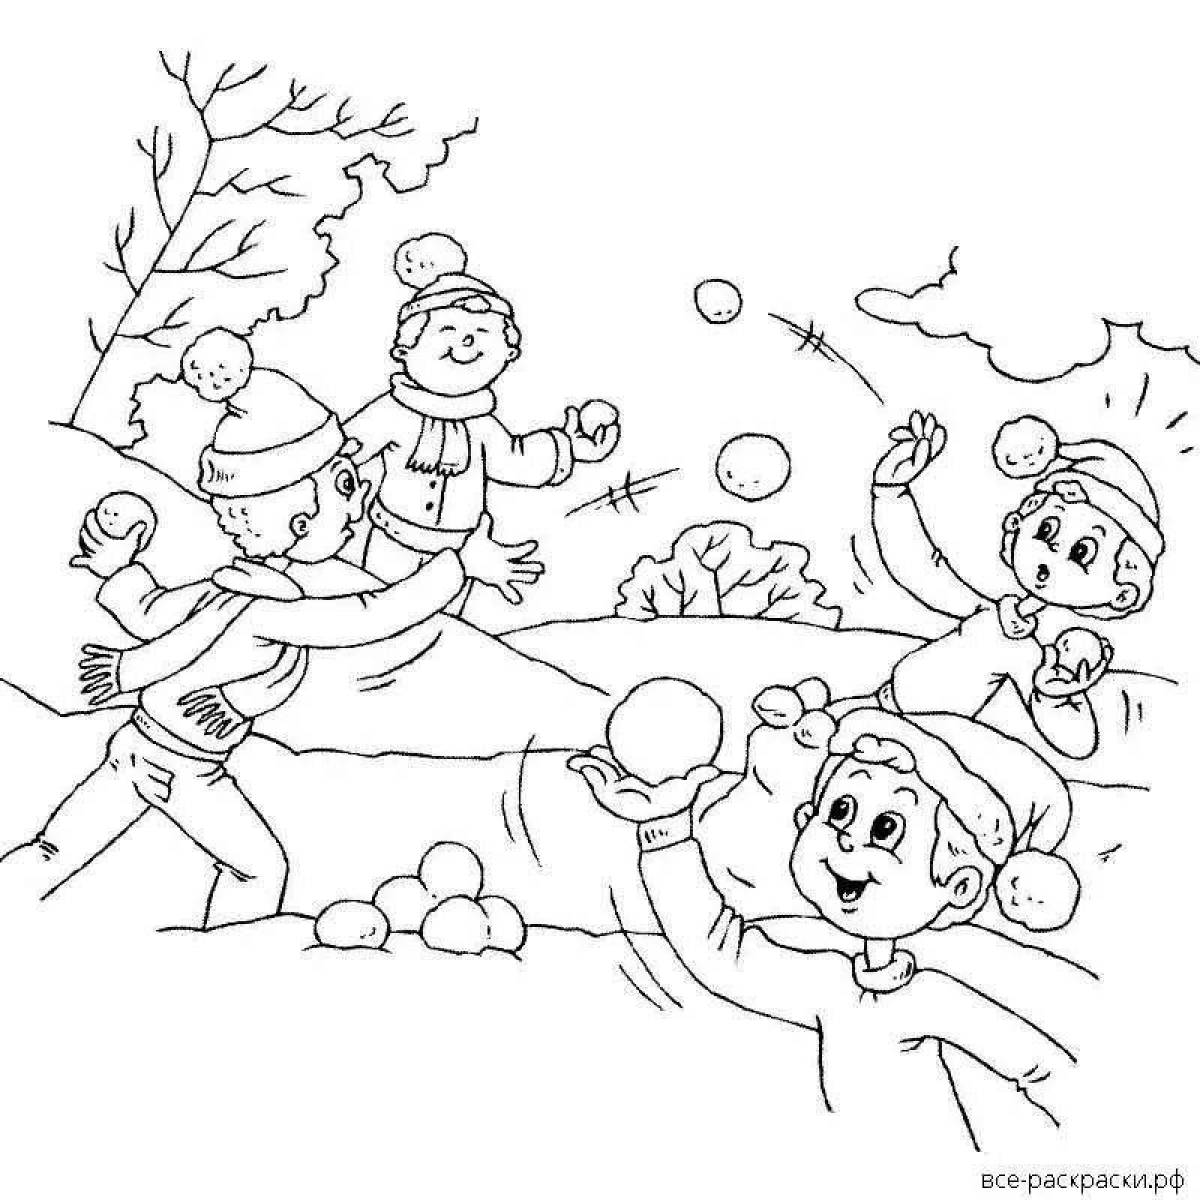 Amazing coloring drawing of winter fun